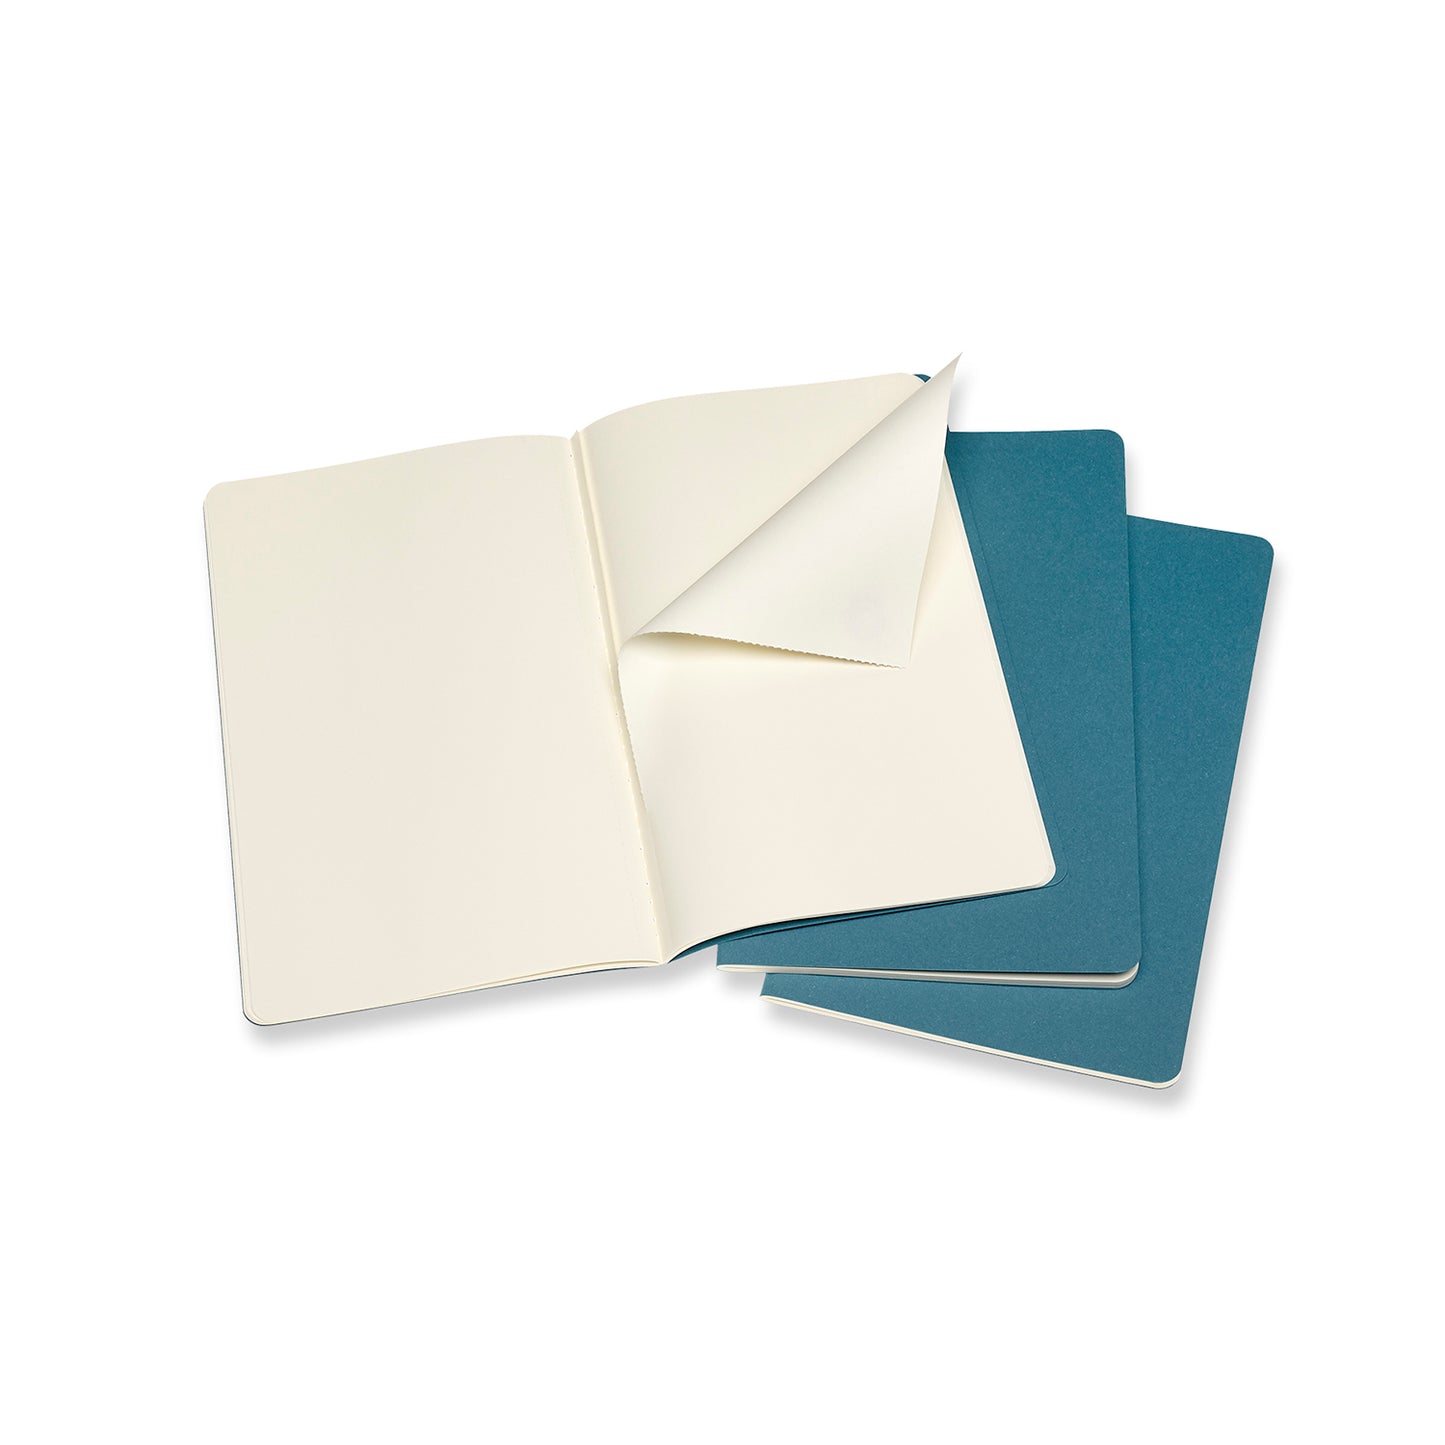 Sea Green Large Cahier Notebook - Set of 3 Black / Ruled / Large,Black / Plain / Large,Black / Dotted / Large,Black / Squared / Large,Brisk Blue / Ruled / Large,Brisk Blue / Plain / Large,Brisk Blue / Dotted / Large,Brisk Blue / Squared / Large Moleskine